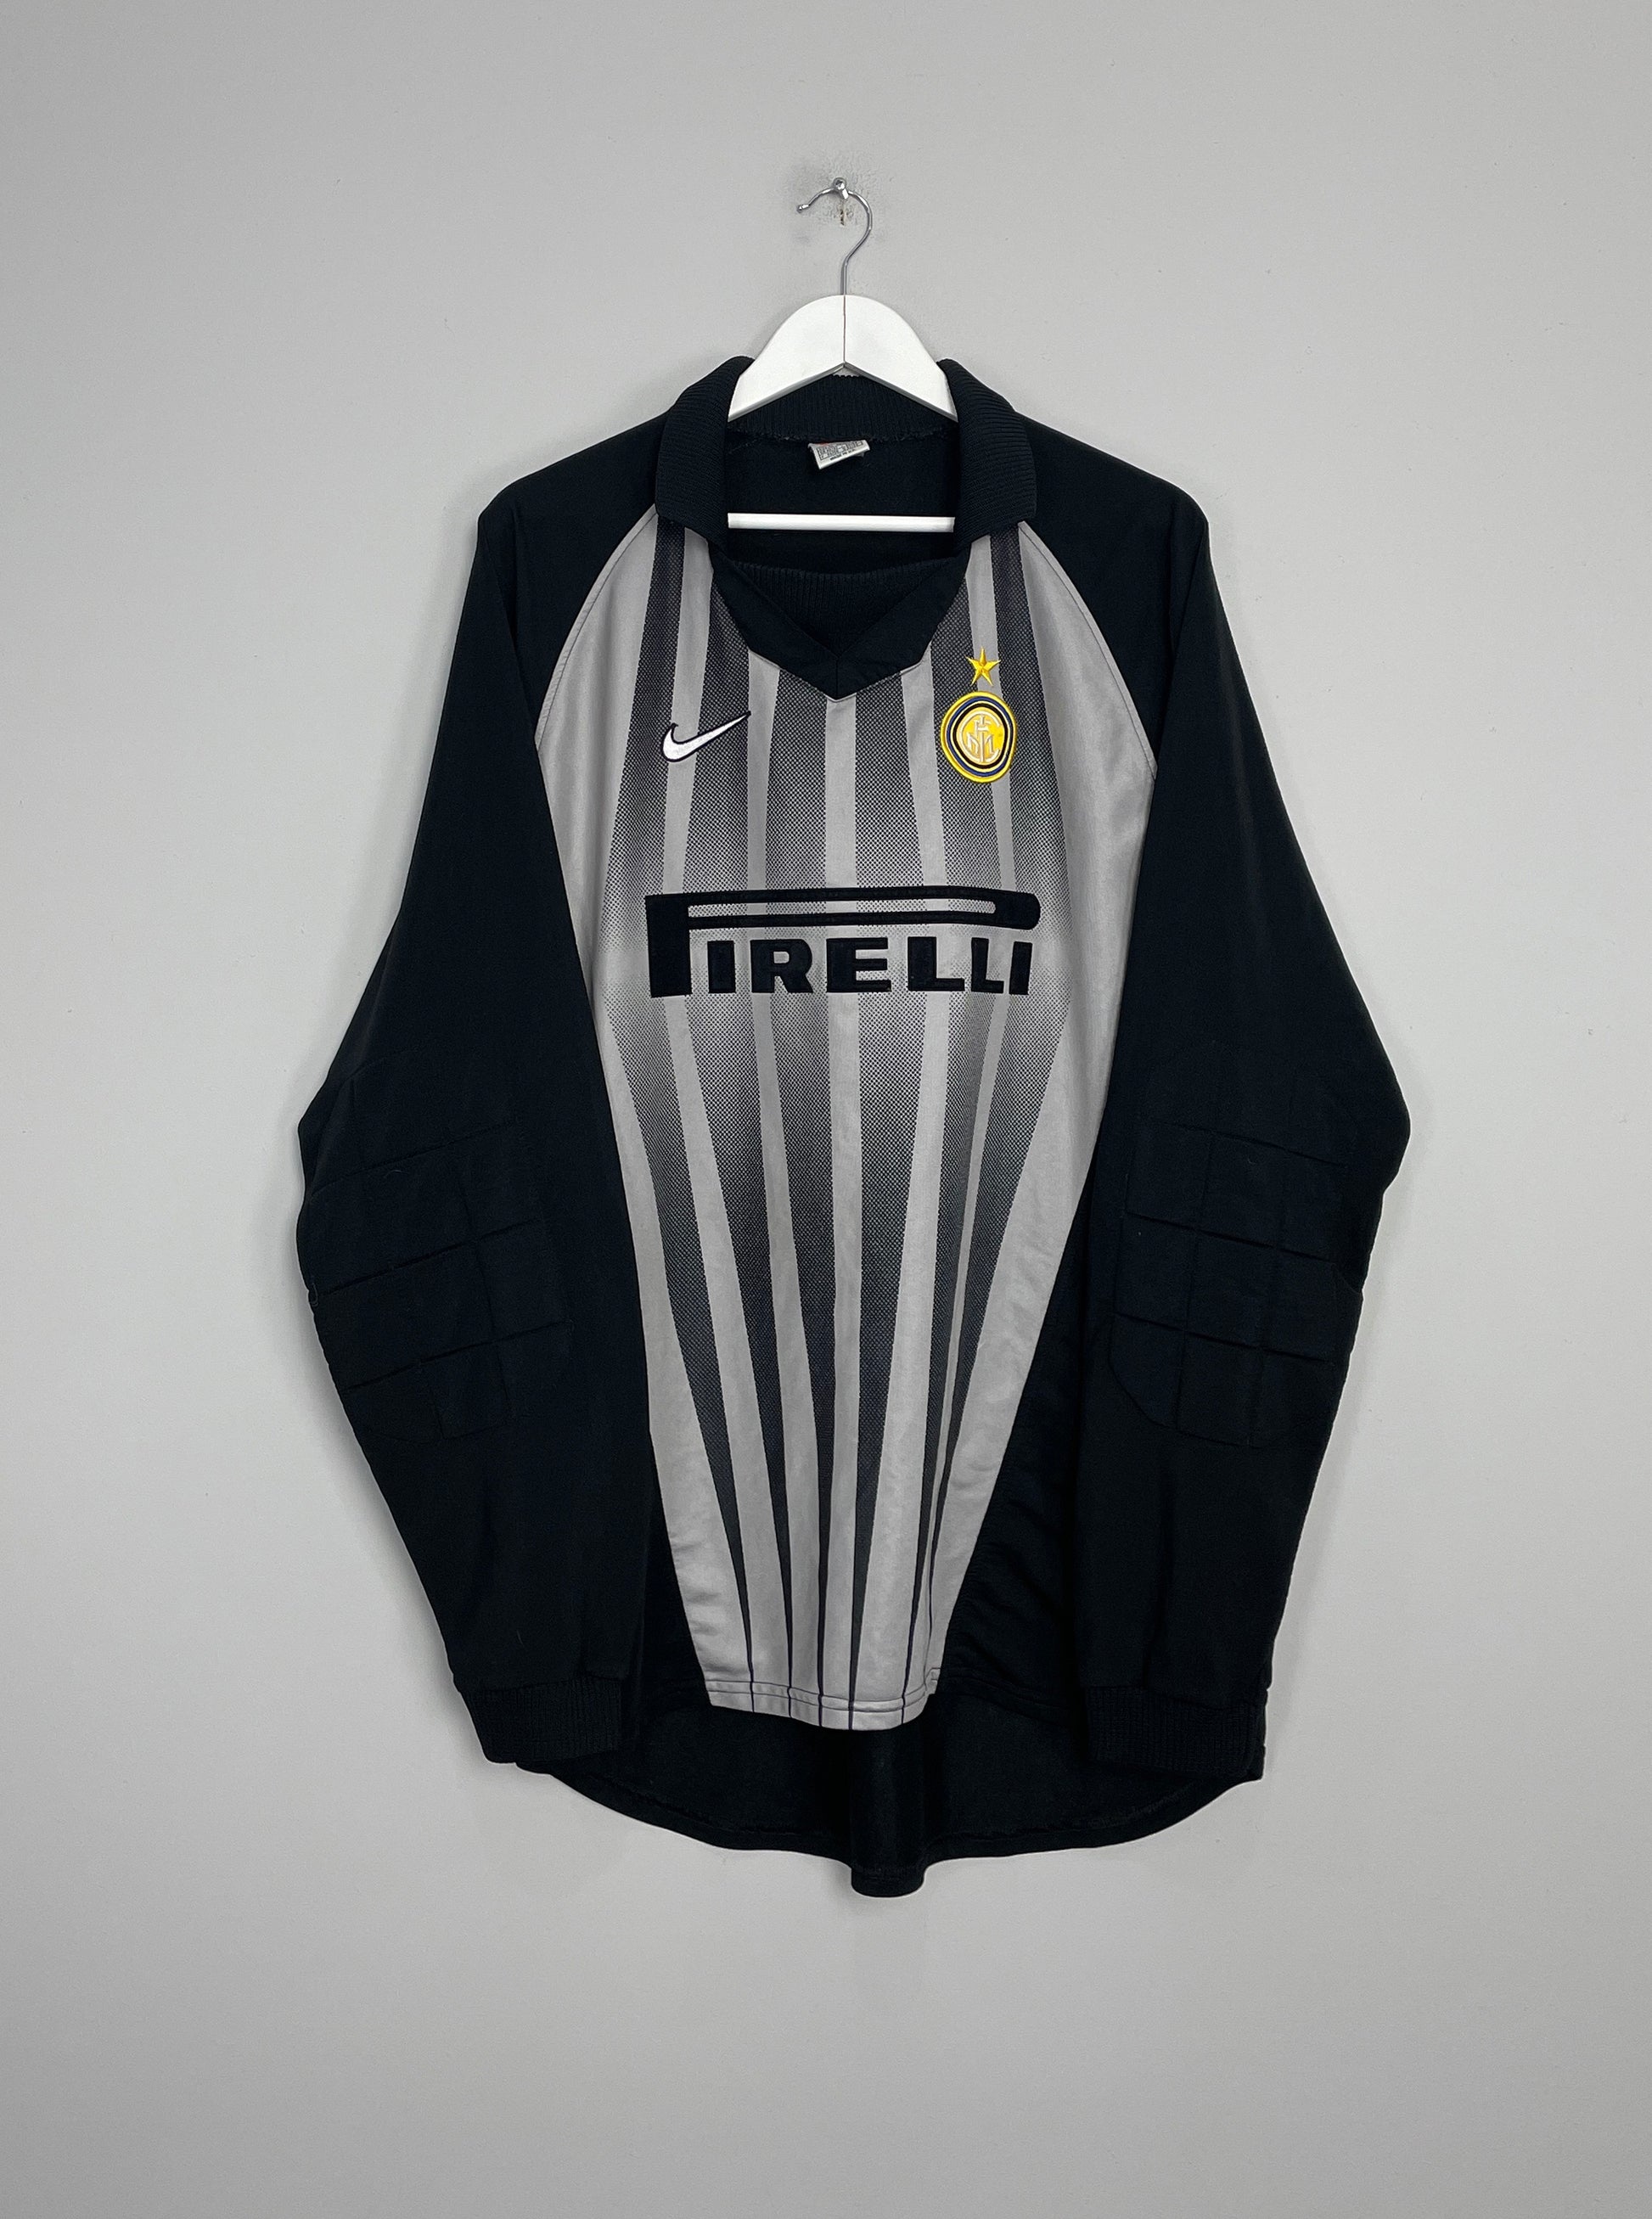 Image of the Inter Milan gk shirt from the 1998/99 season